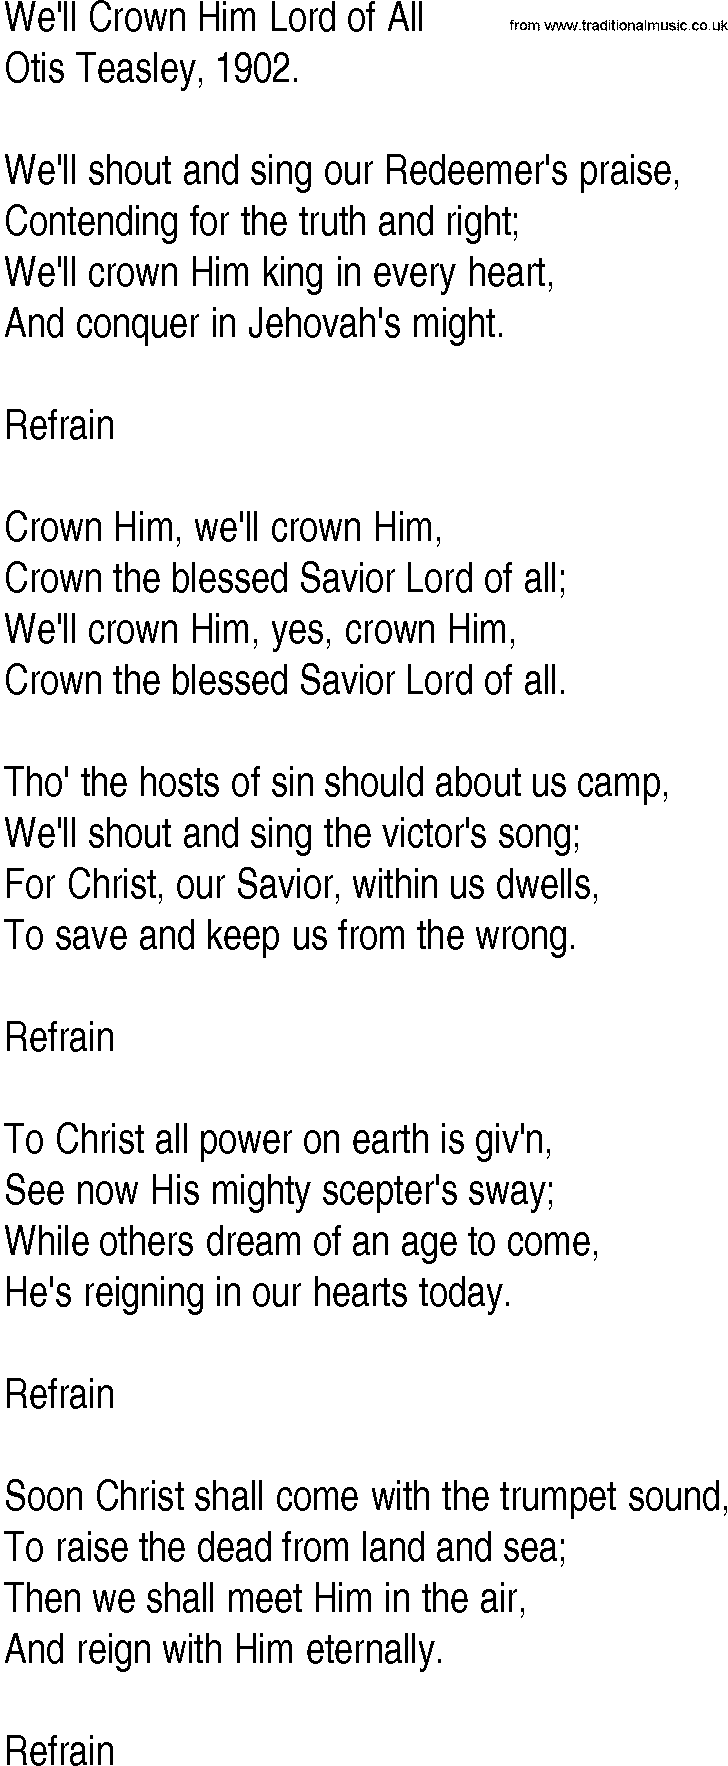 Hymn and Gospel Song: We'll Crown Him Lord of All by Otis Teasley lyrics